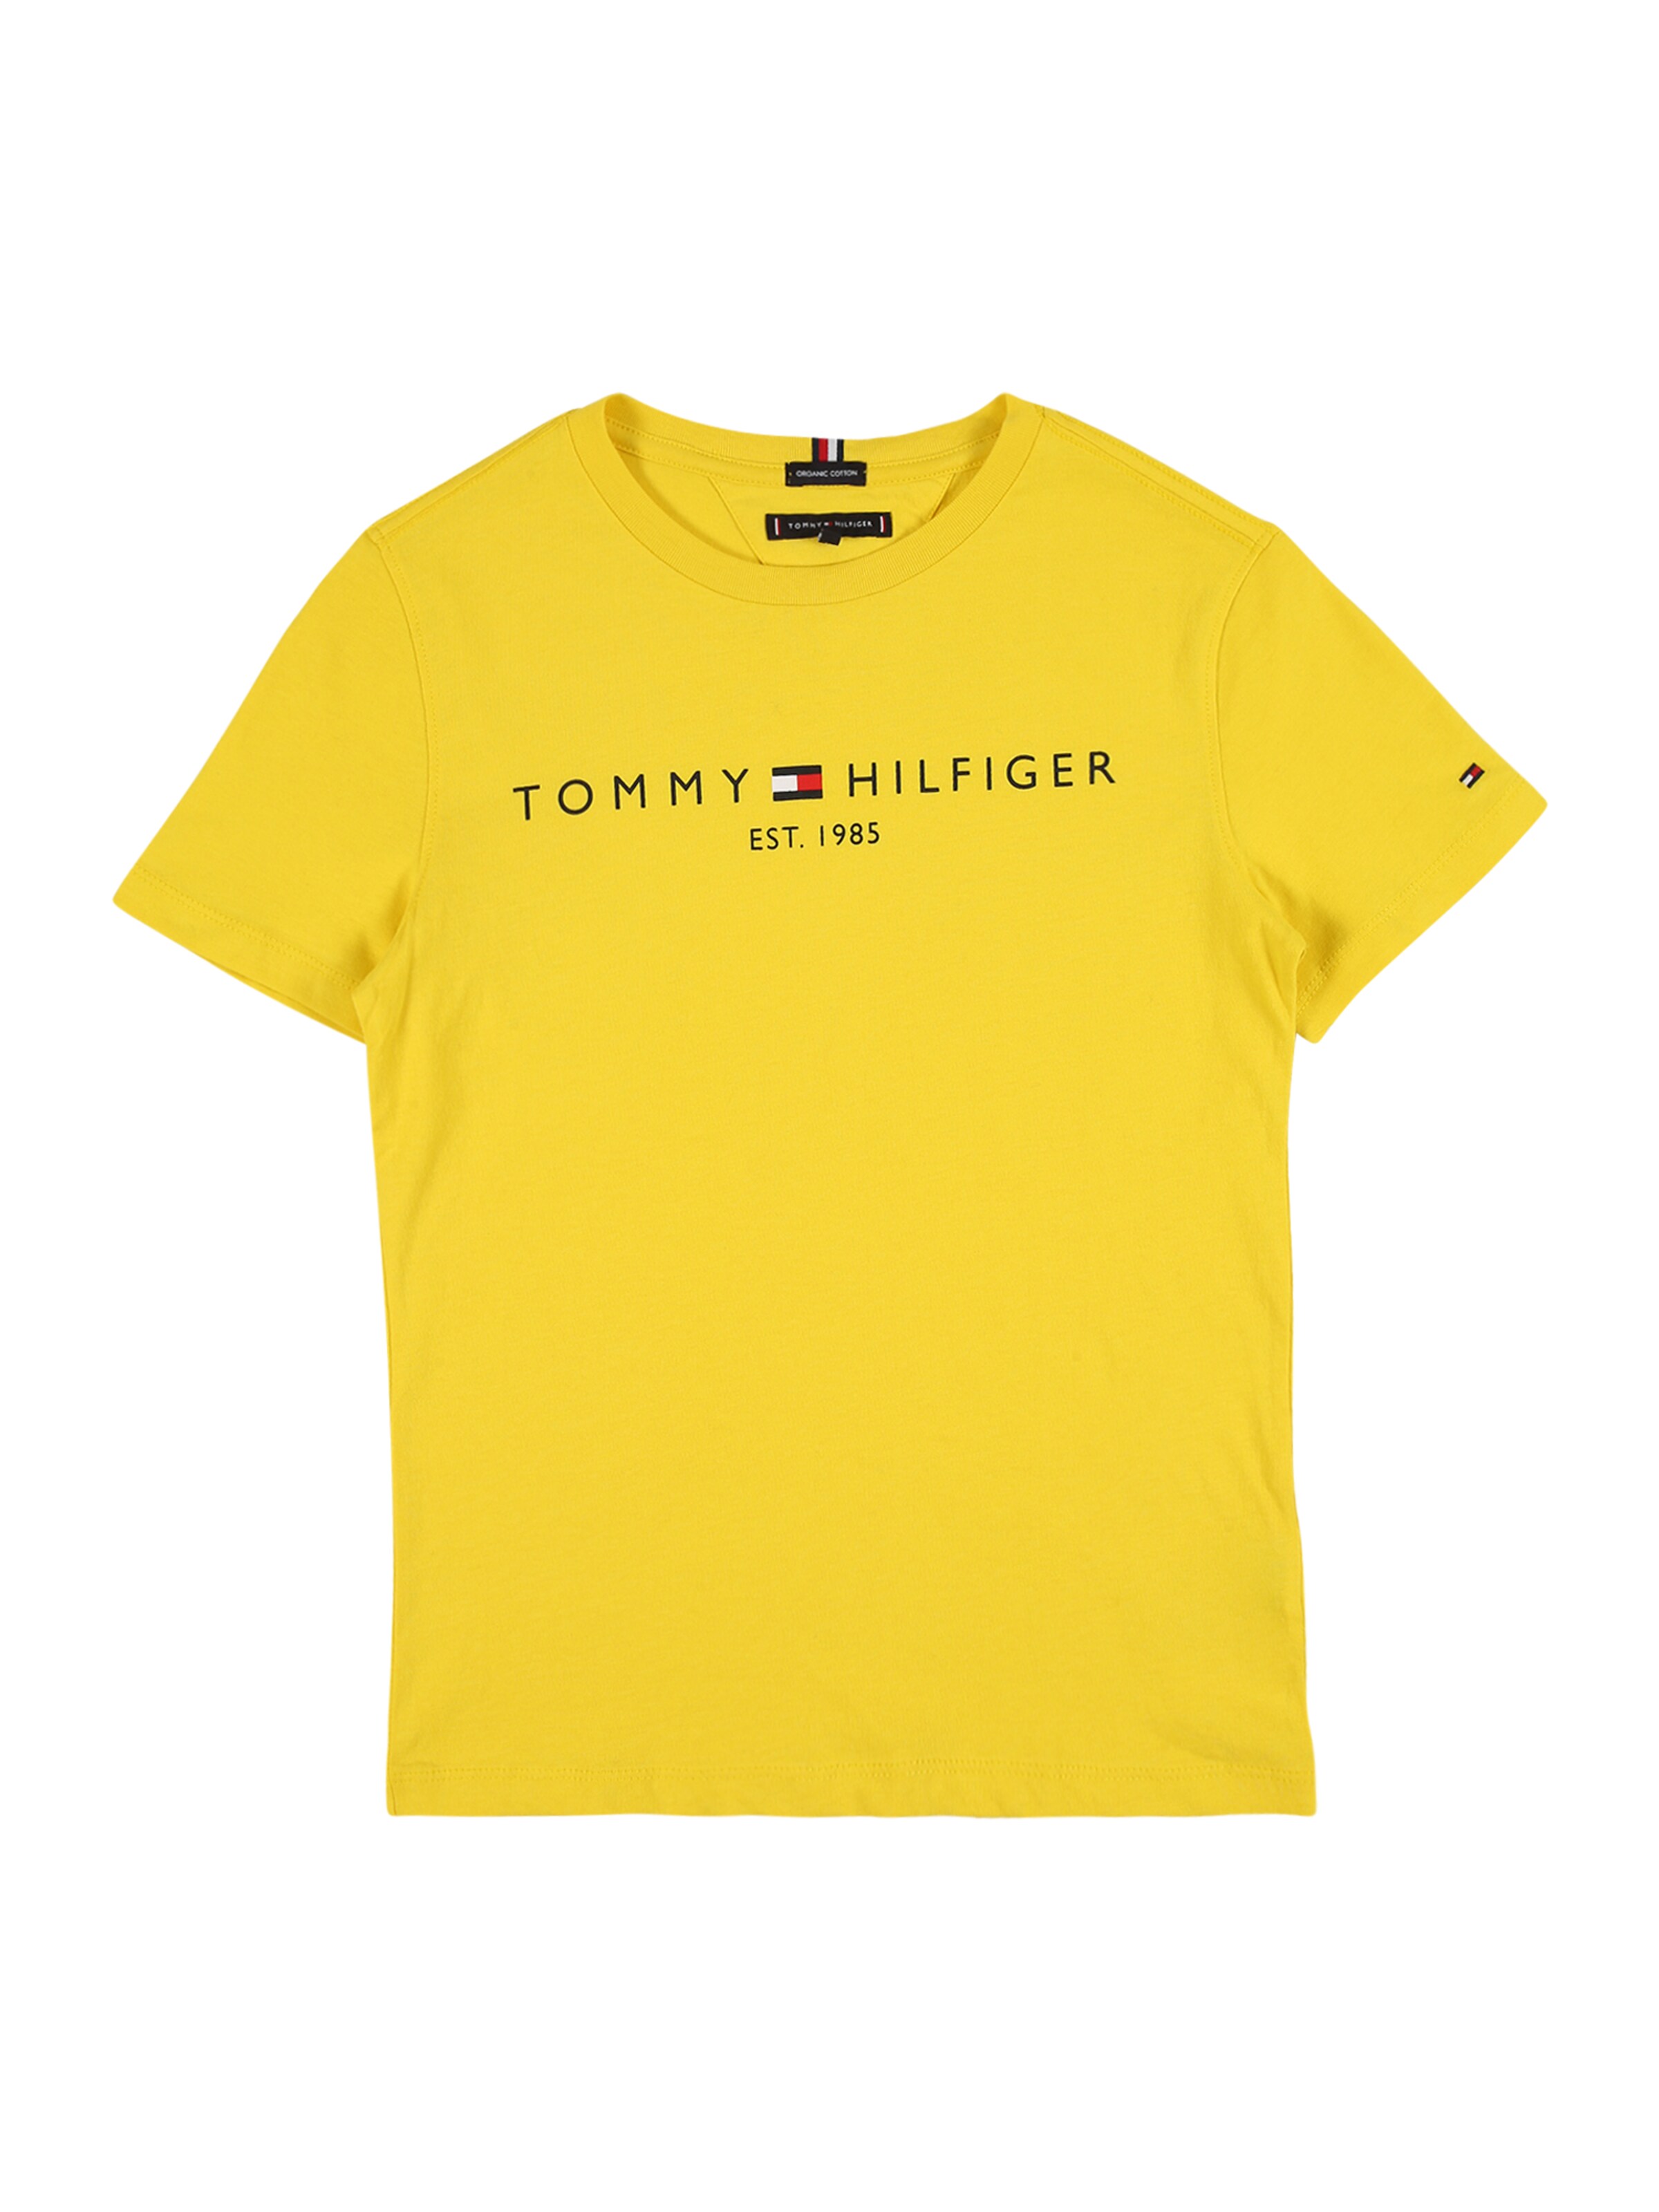 yellow hilfiger shirt